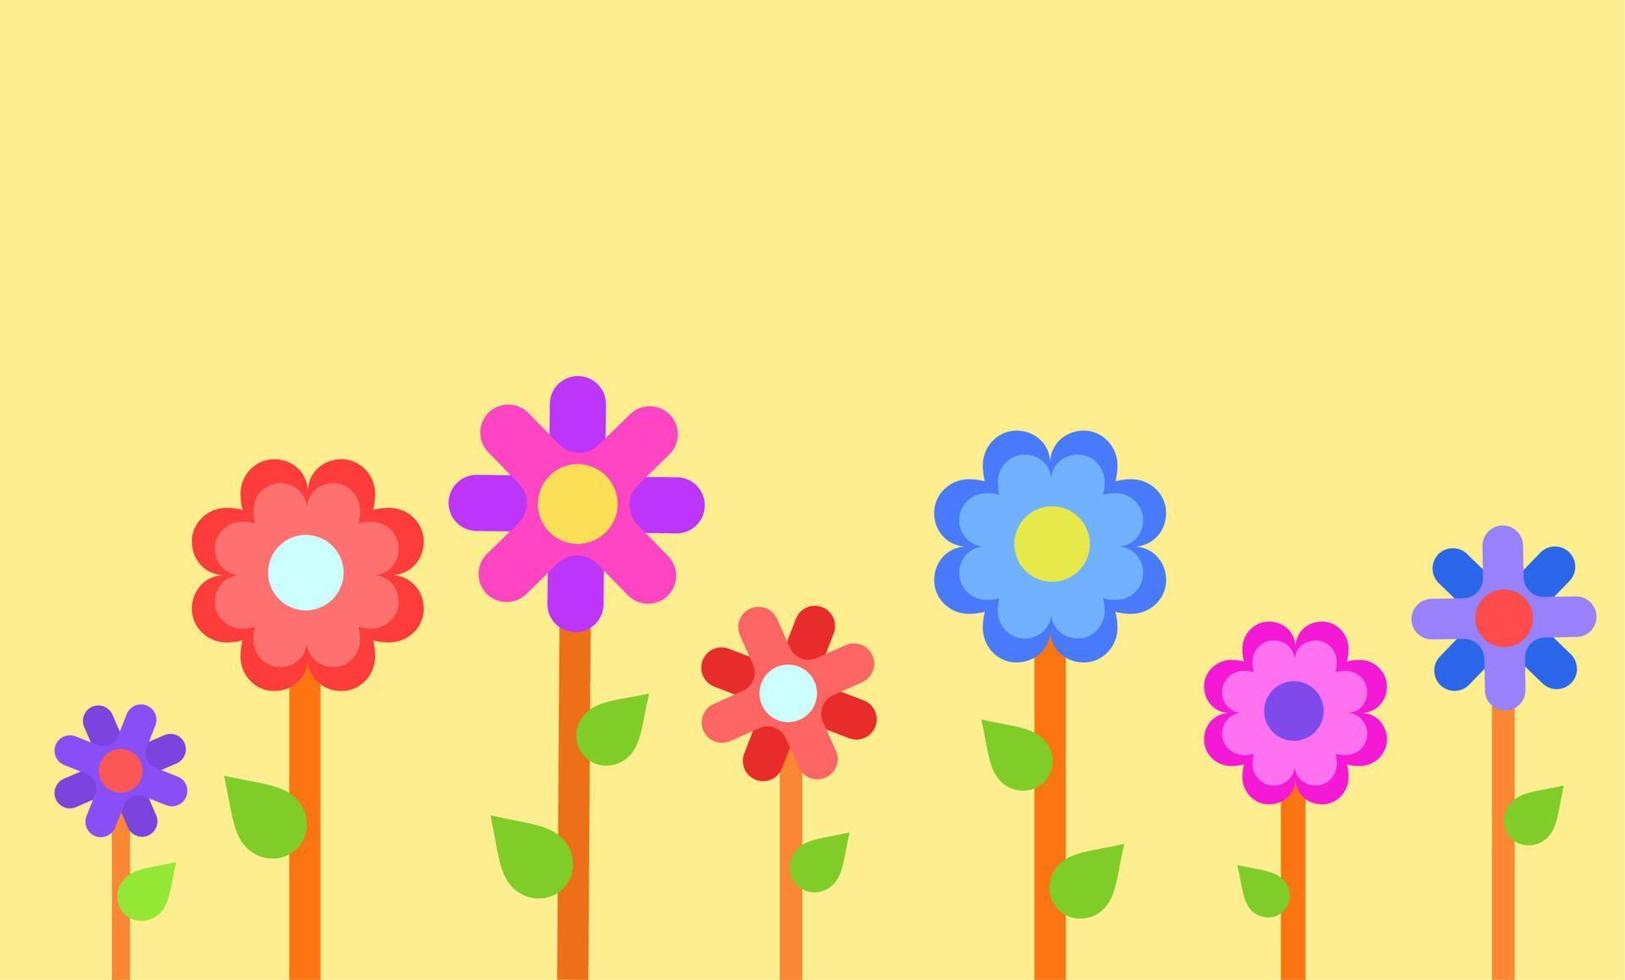 a colorful flower illustration background wallpaper vector design